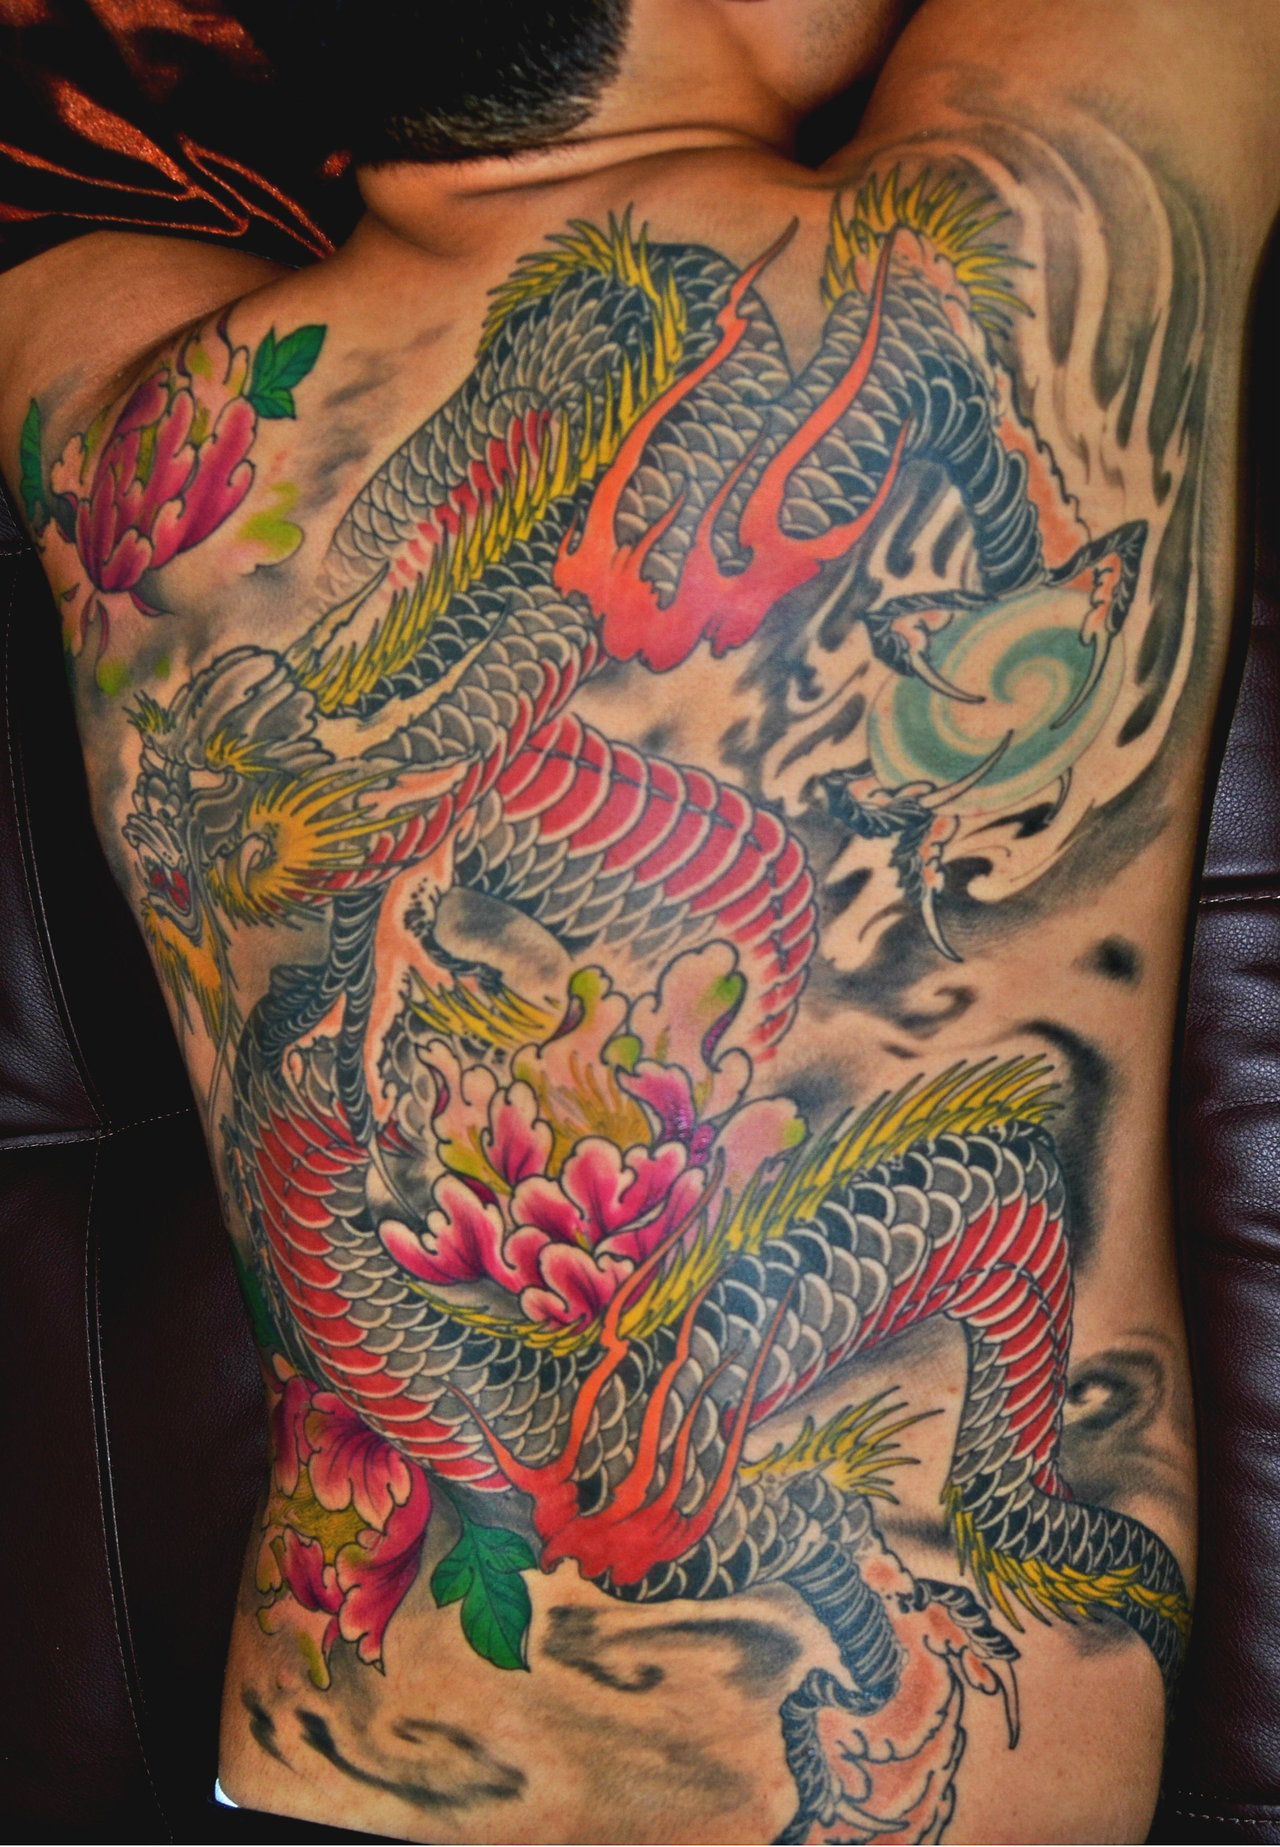 Awesome dragon back tattoo | Best tattoo design ideas